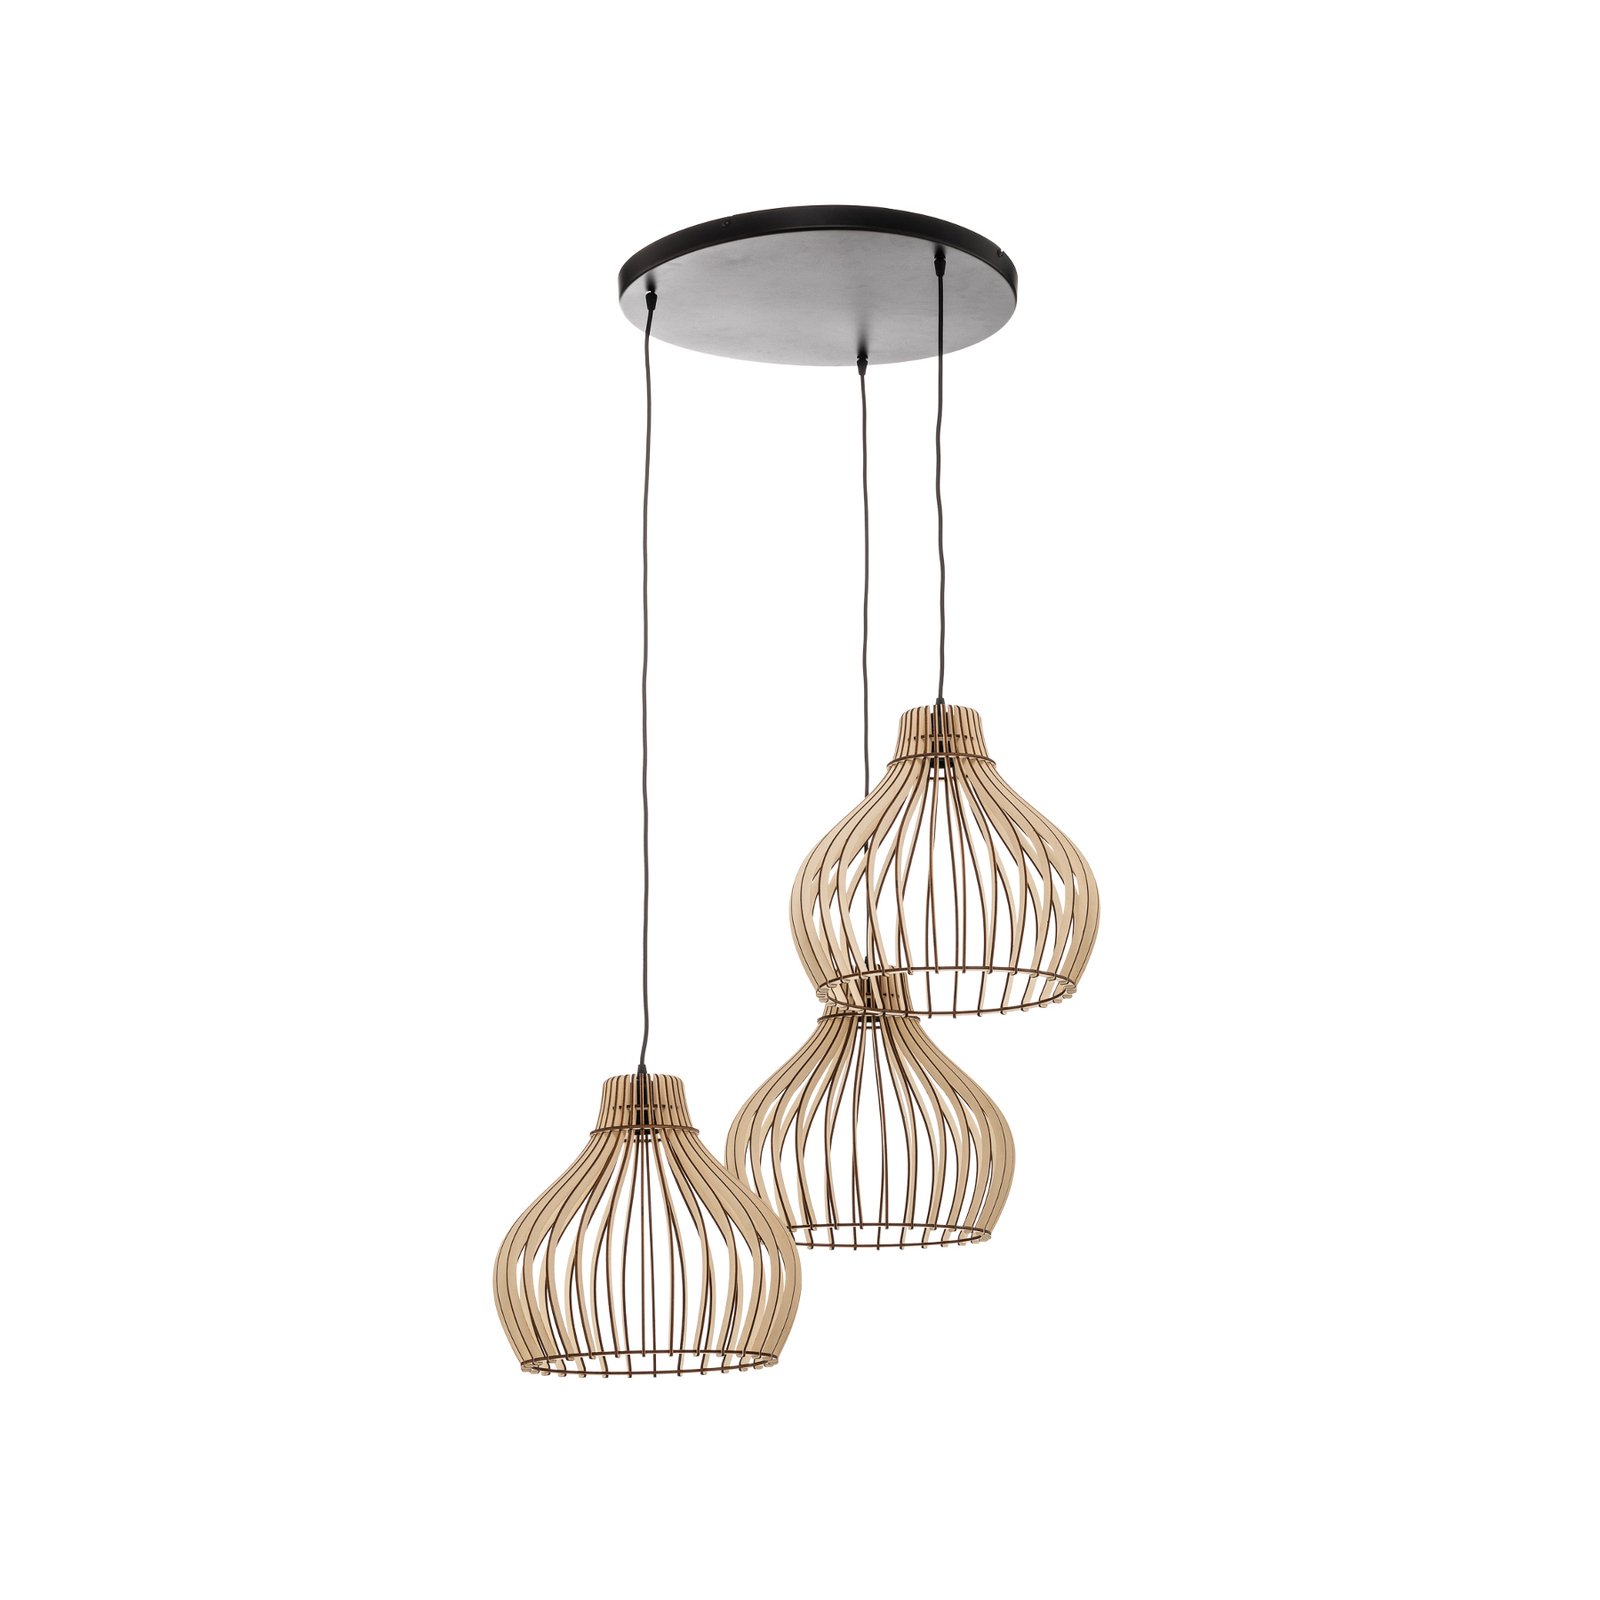 Barrel hanging light, wood lampshades 3-bulb round